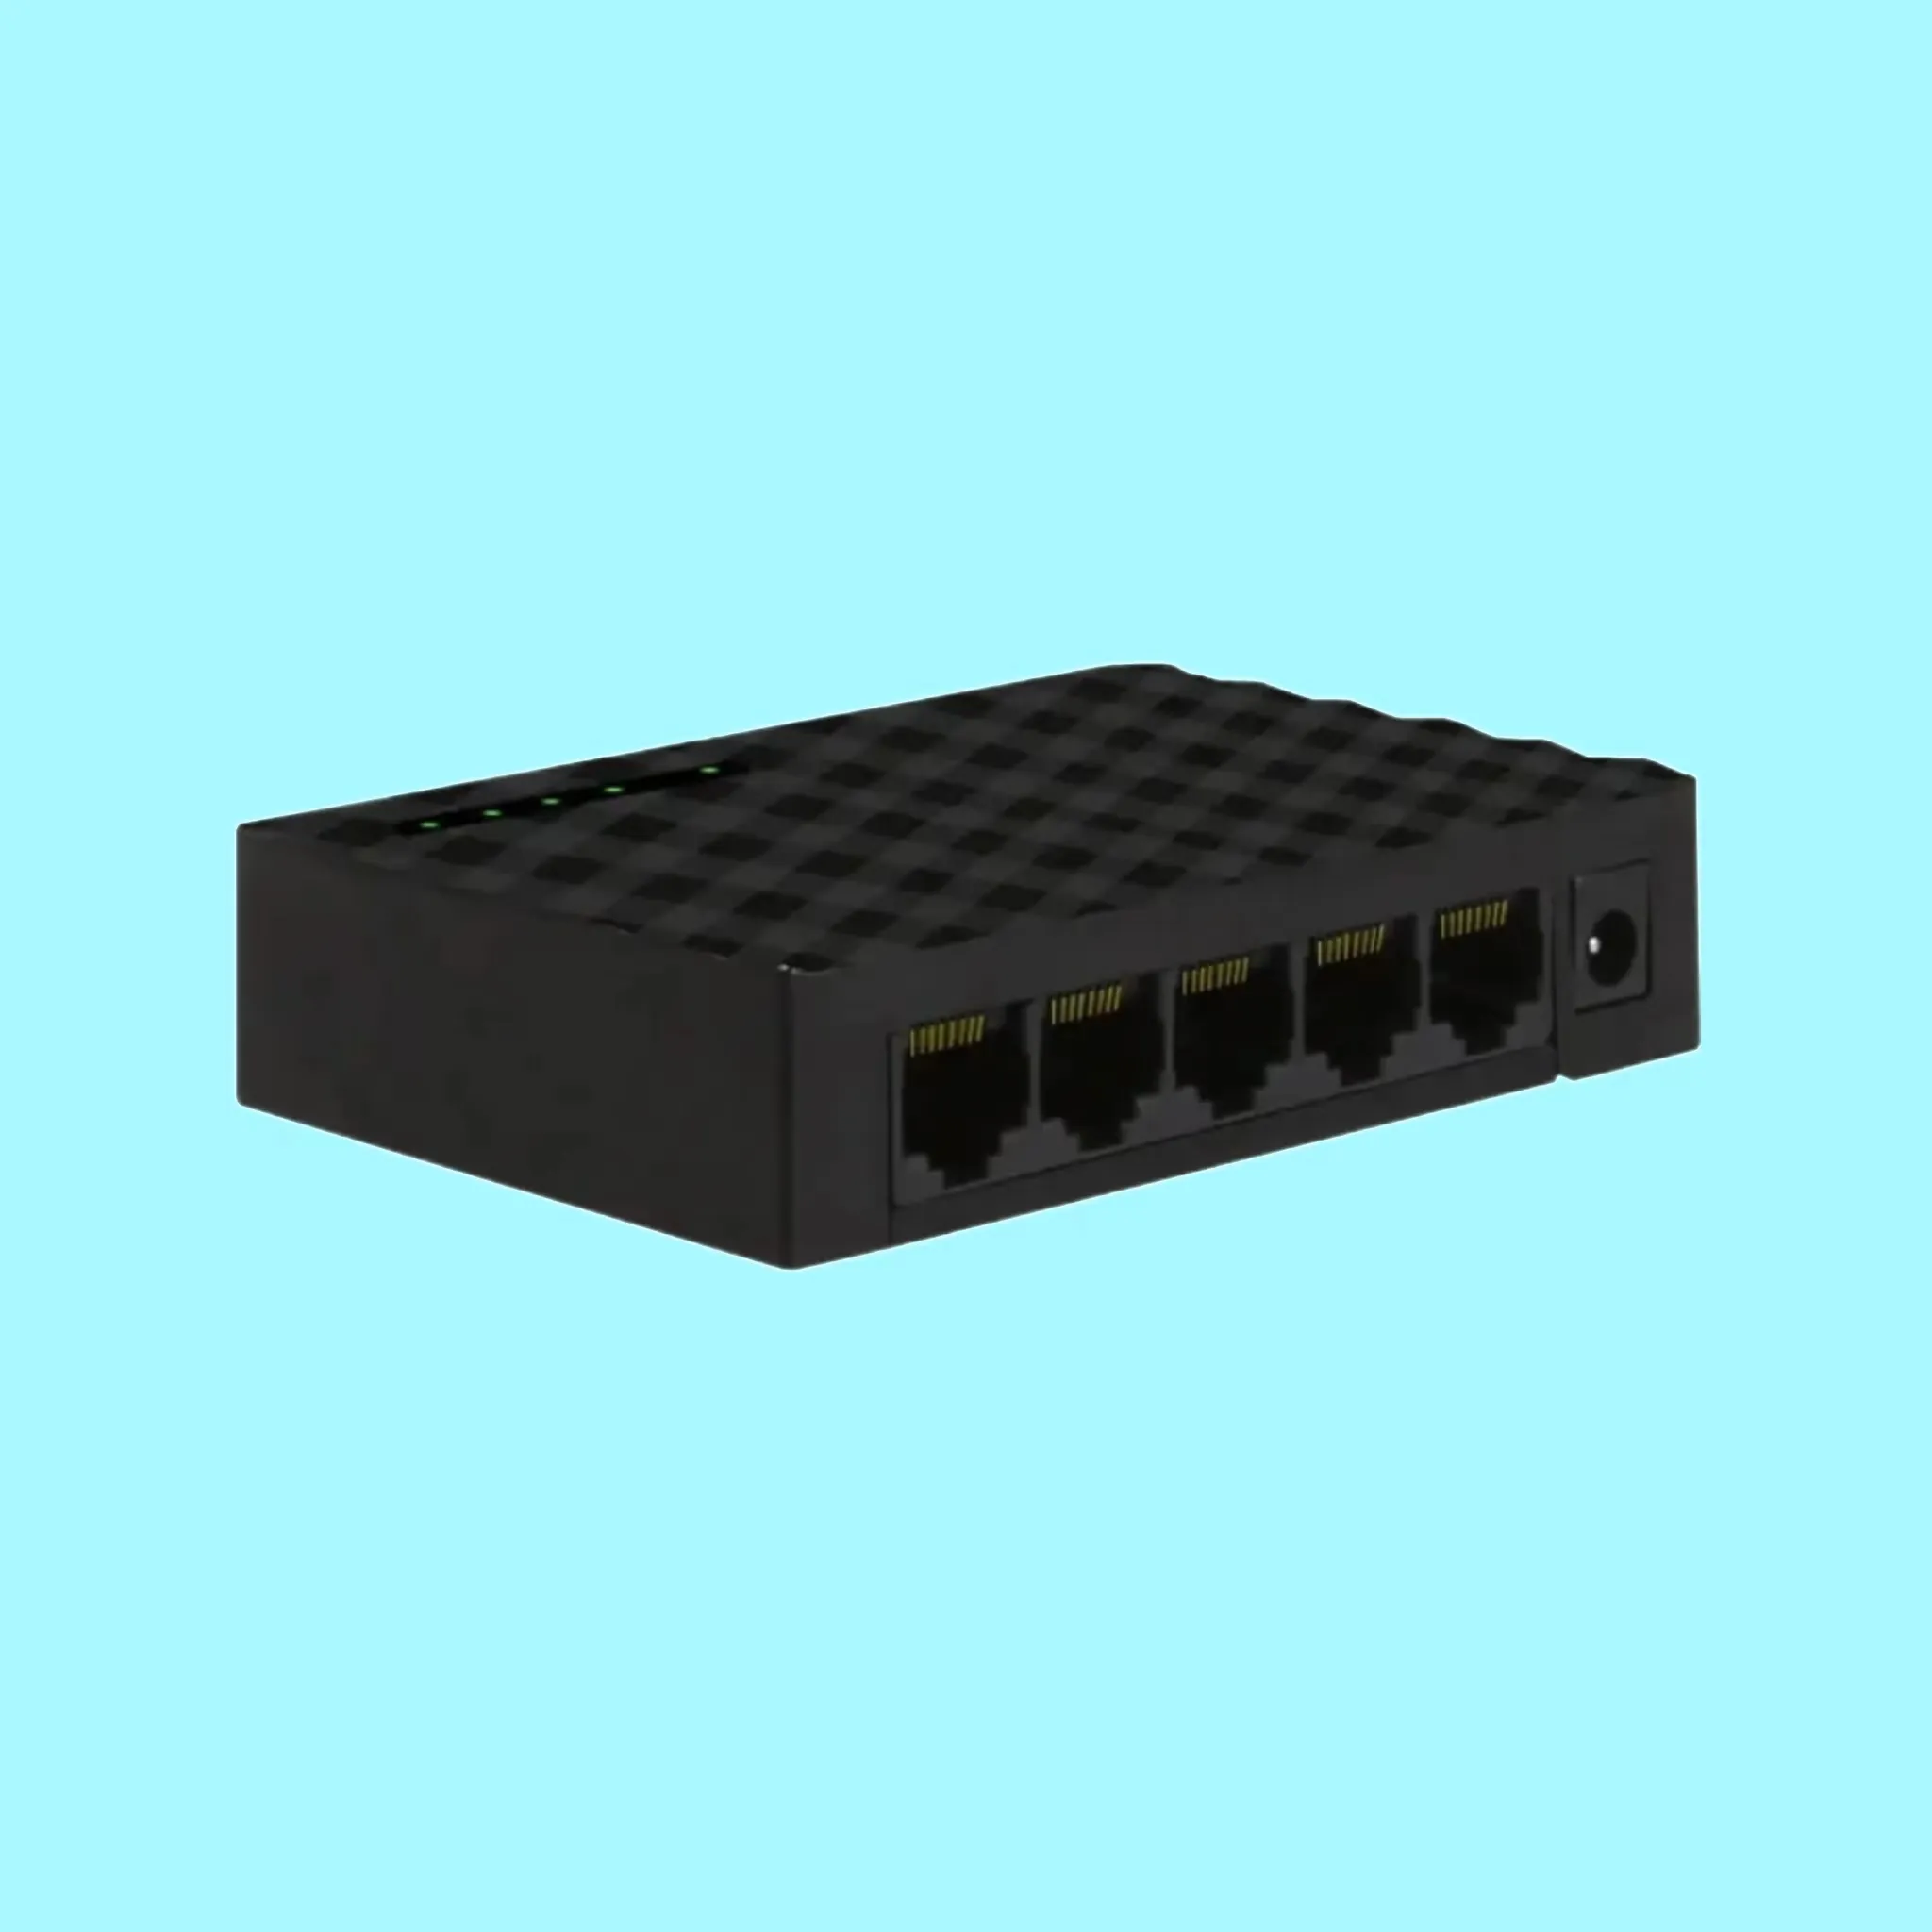 Huastlink New Design POE 5 Ports gigabit ethernet switch network switches 1000pcs Order Provide Free Sample